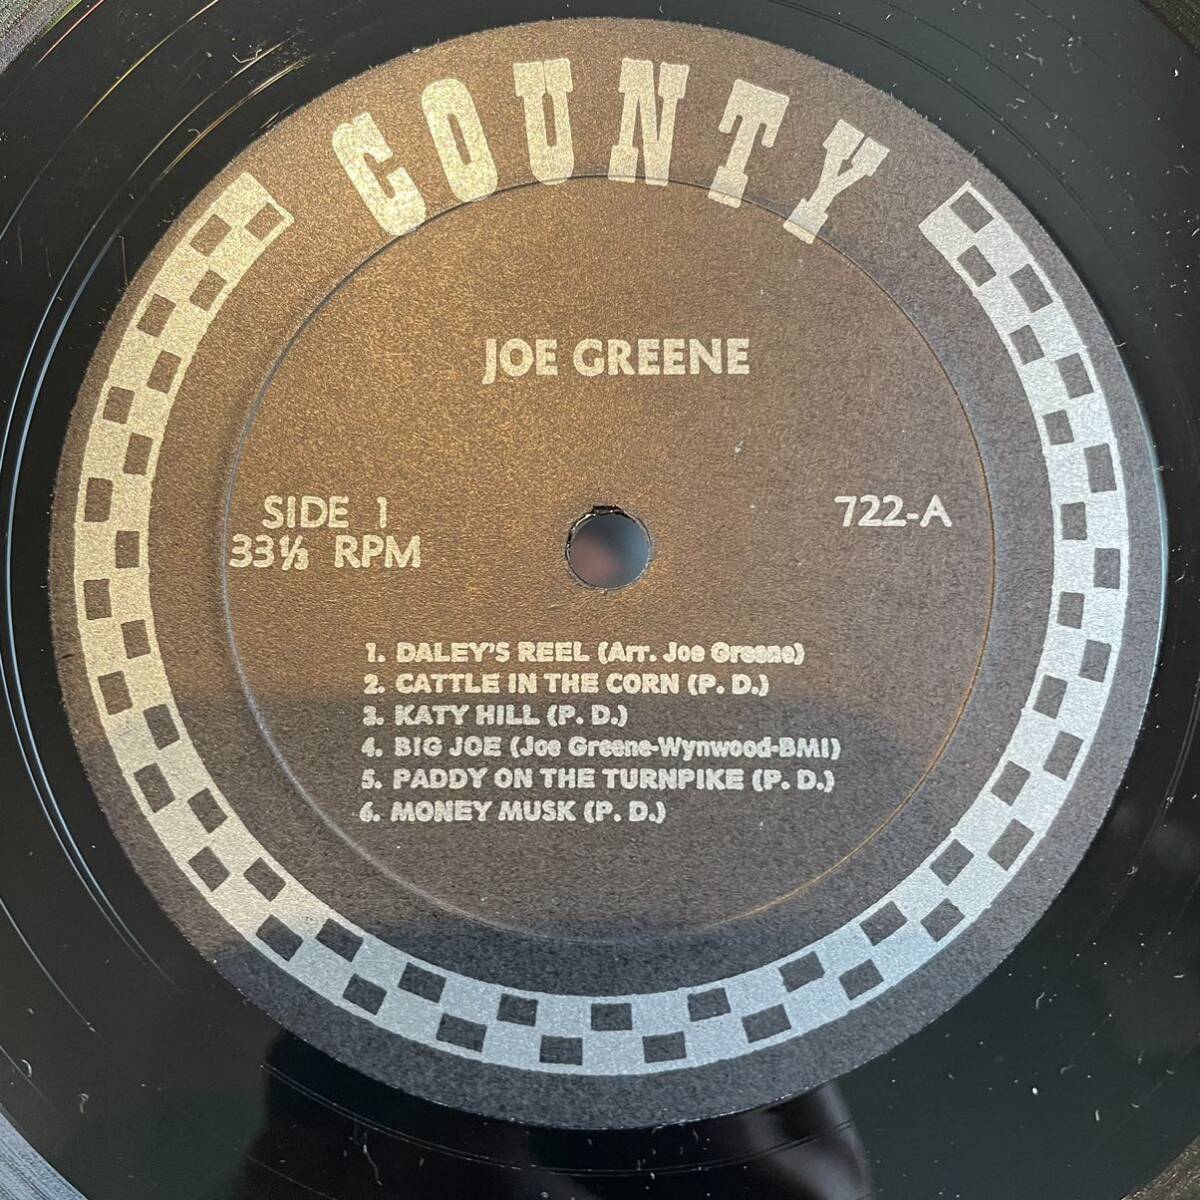 【US盤Org.黒銀レーベル】 Joe Greene Joe Greene's Fiddle Album (1969) County Records 722 Bluegrass_画像3